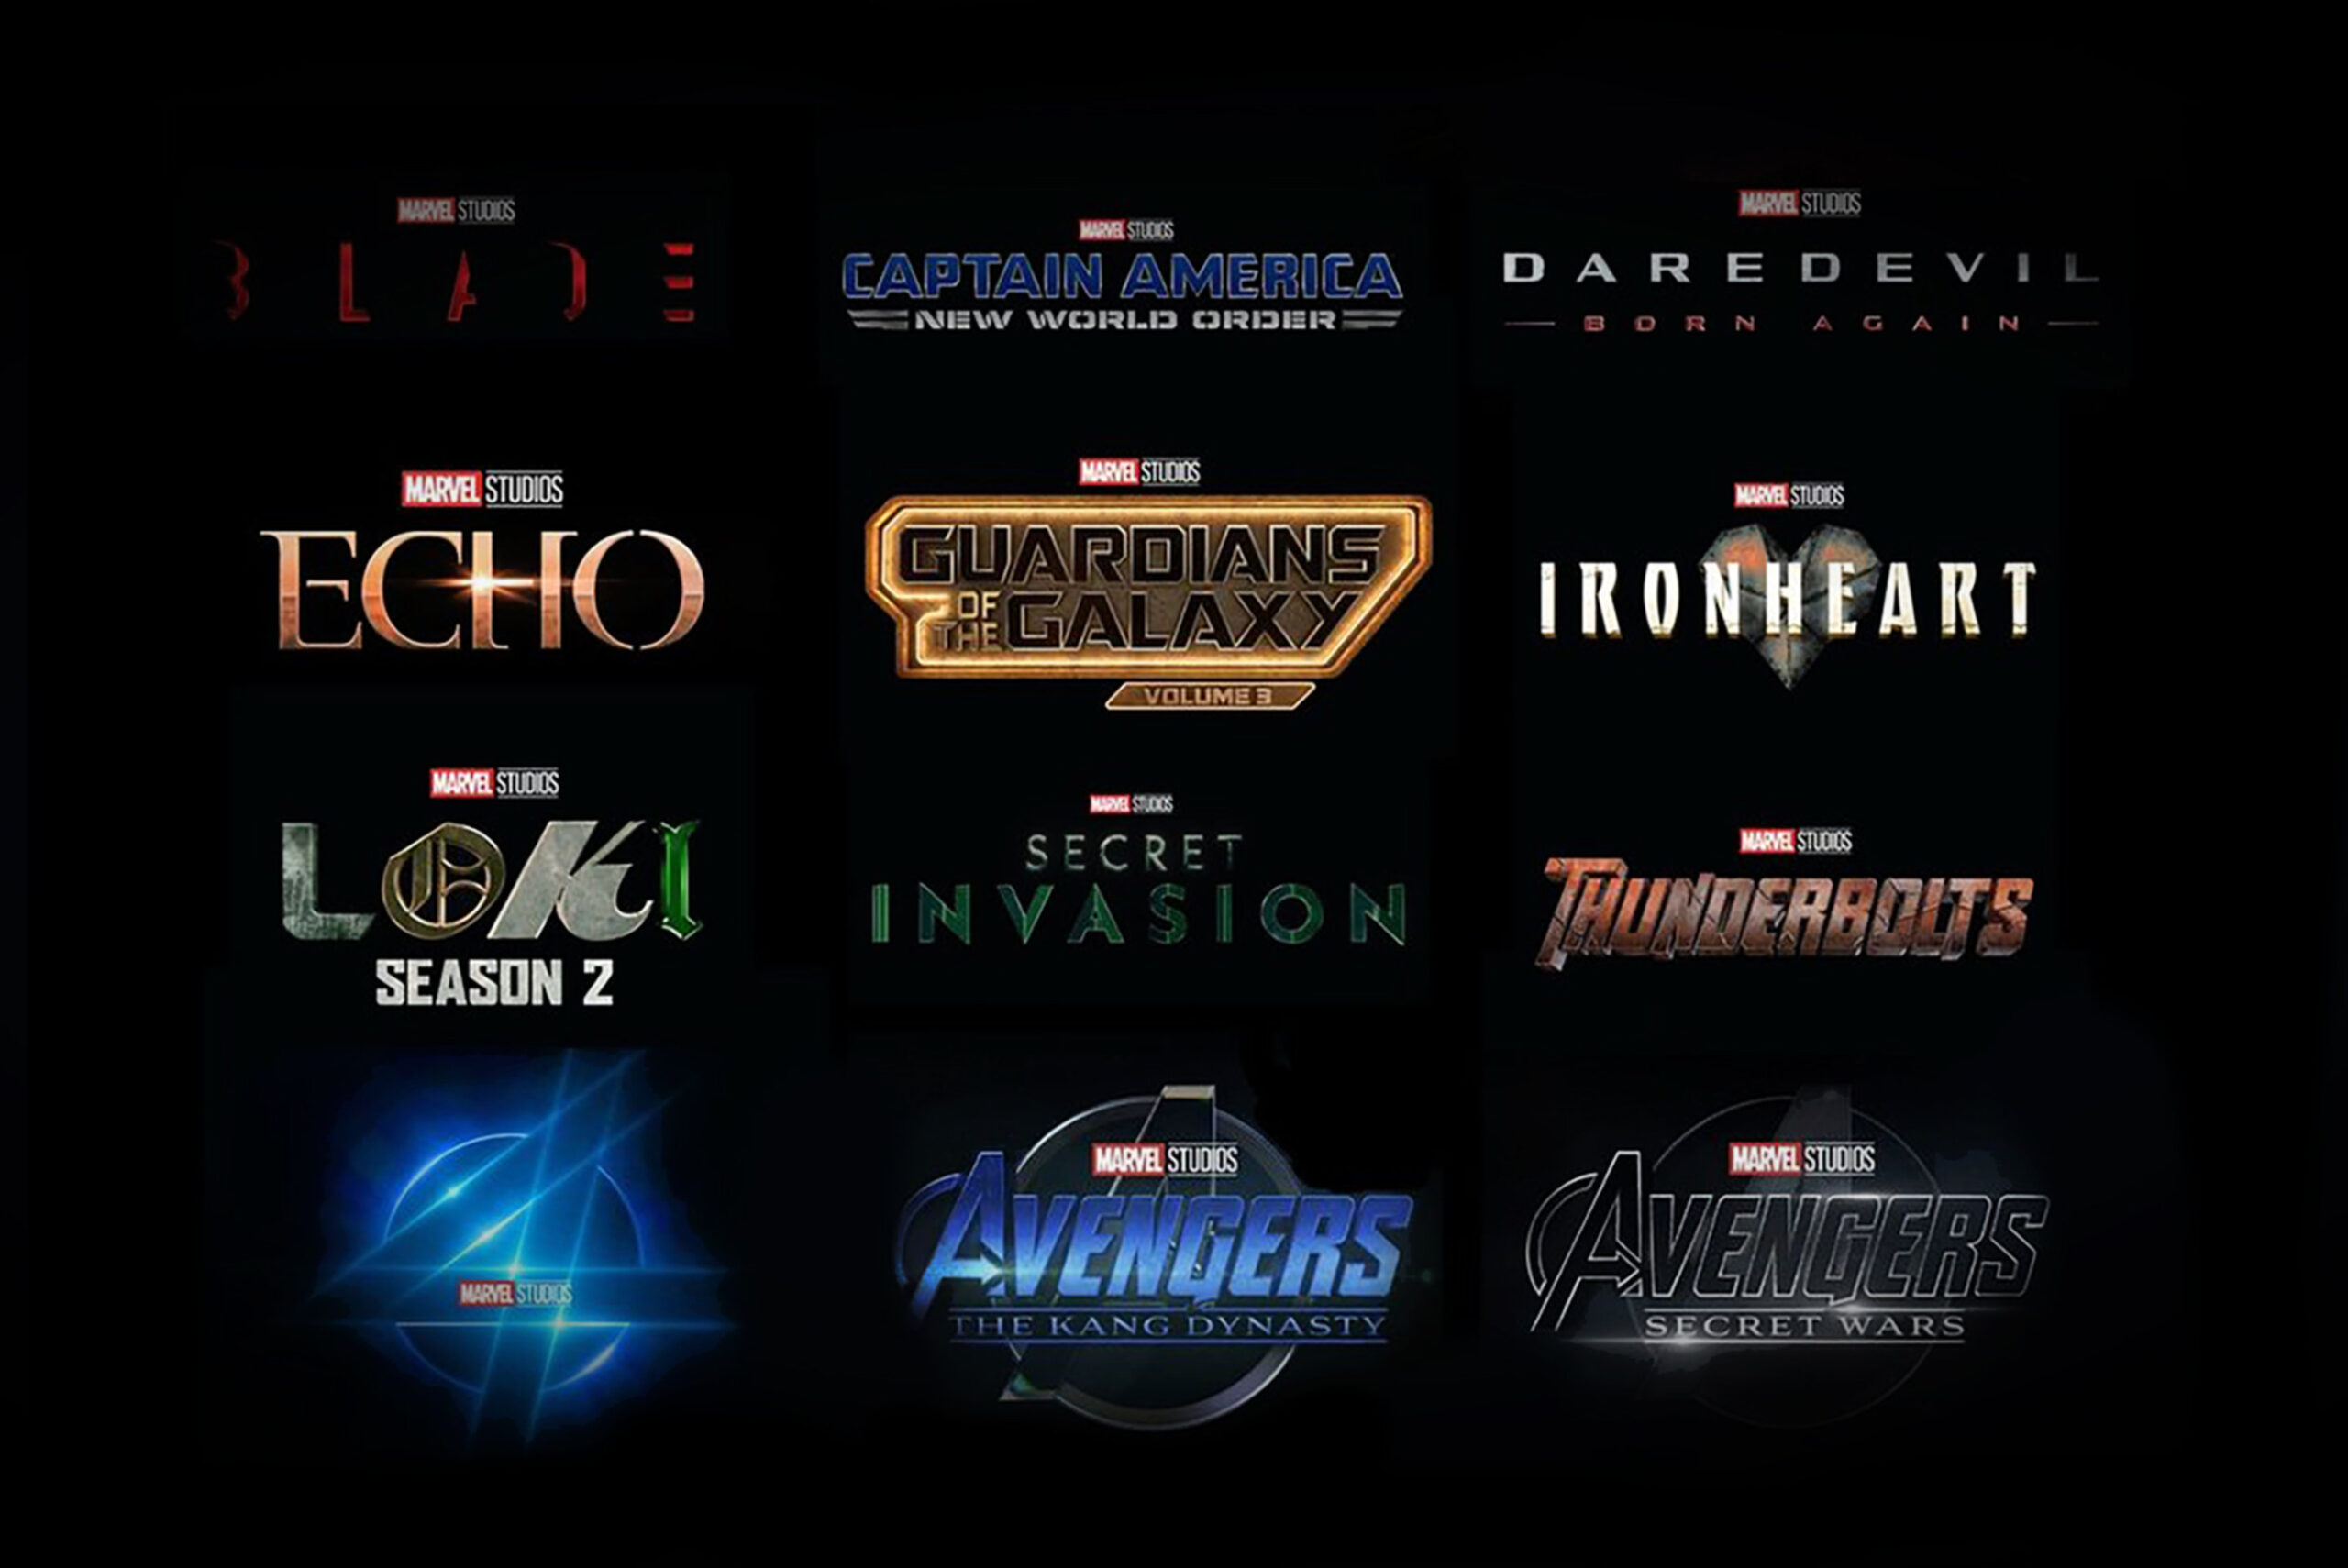 Marvel nuove date per i film, da Blade ad Avengers Secret Wars